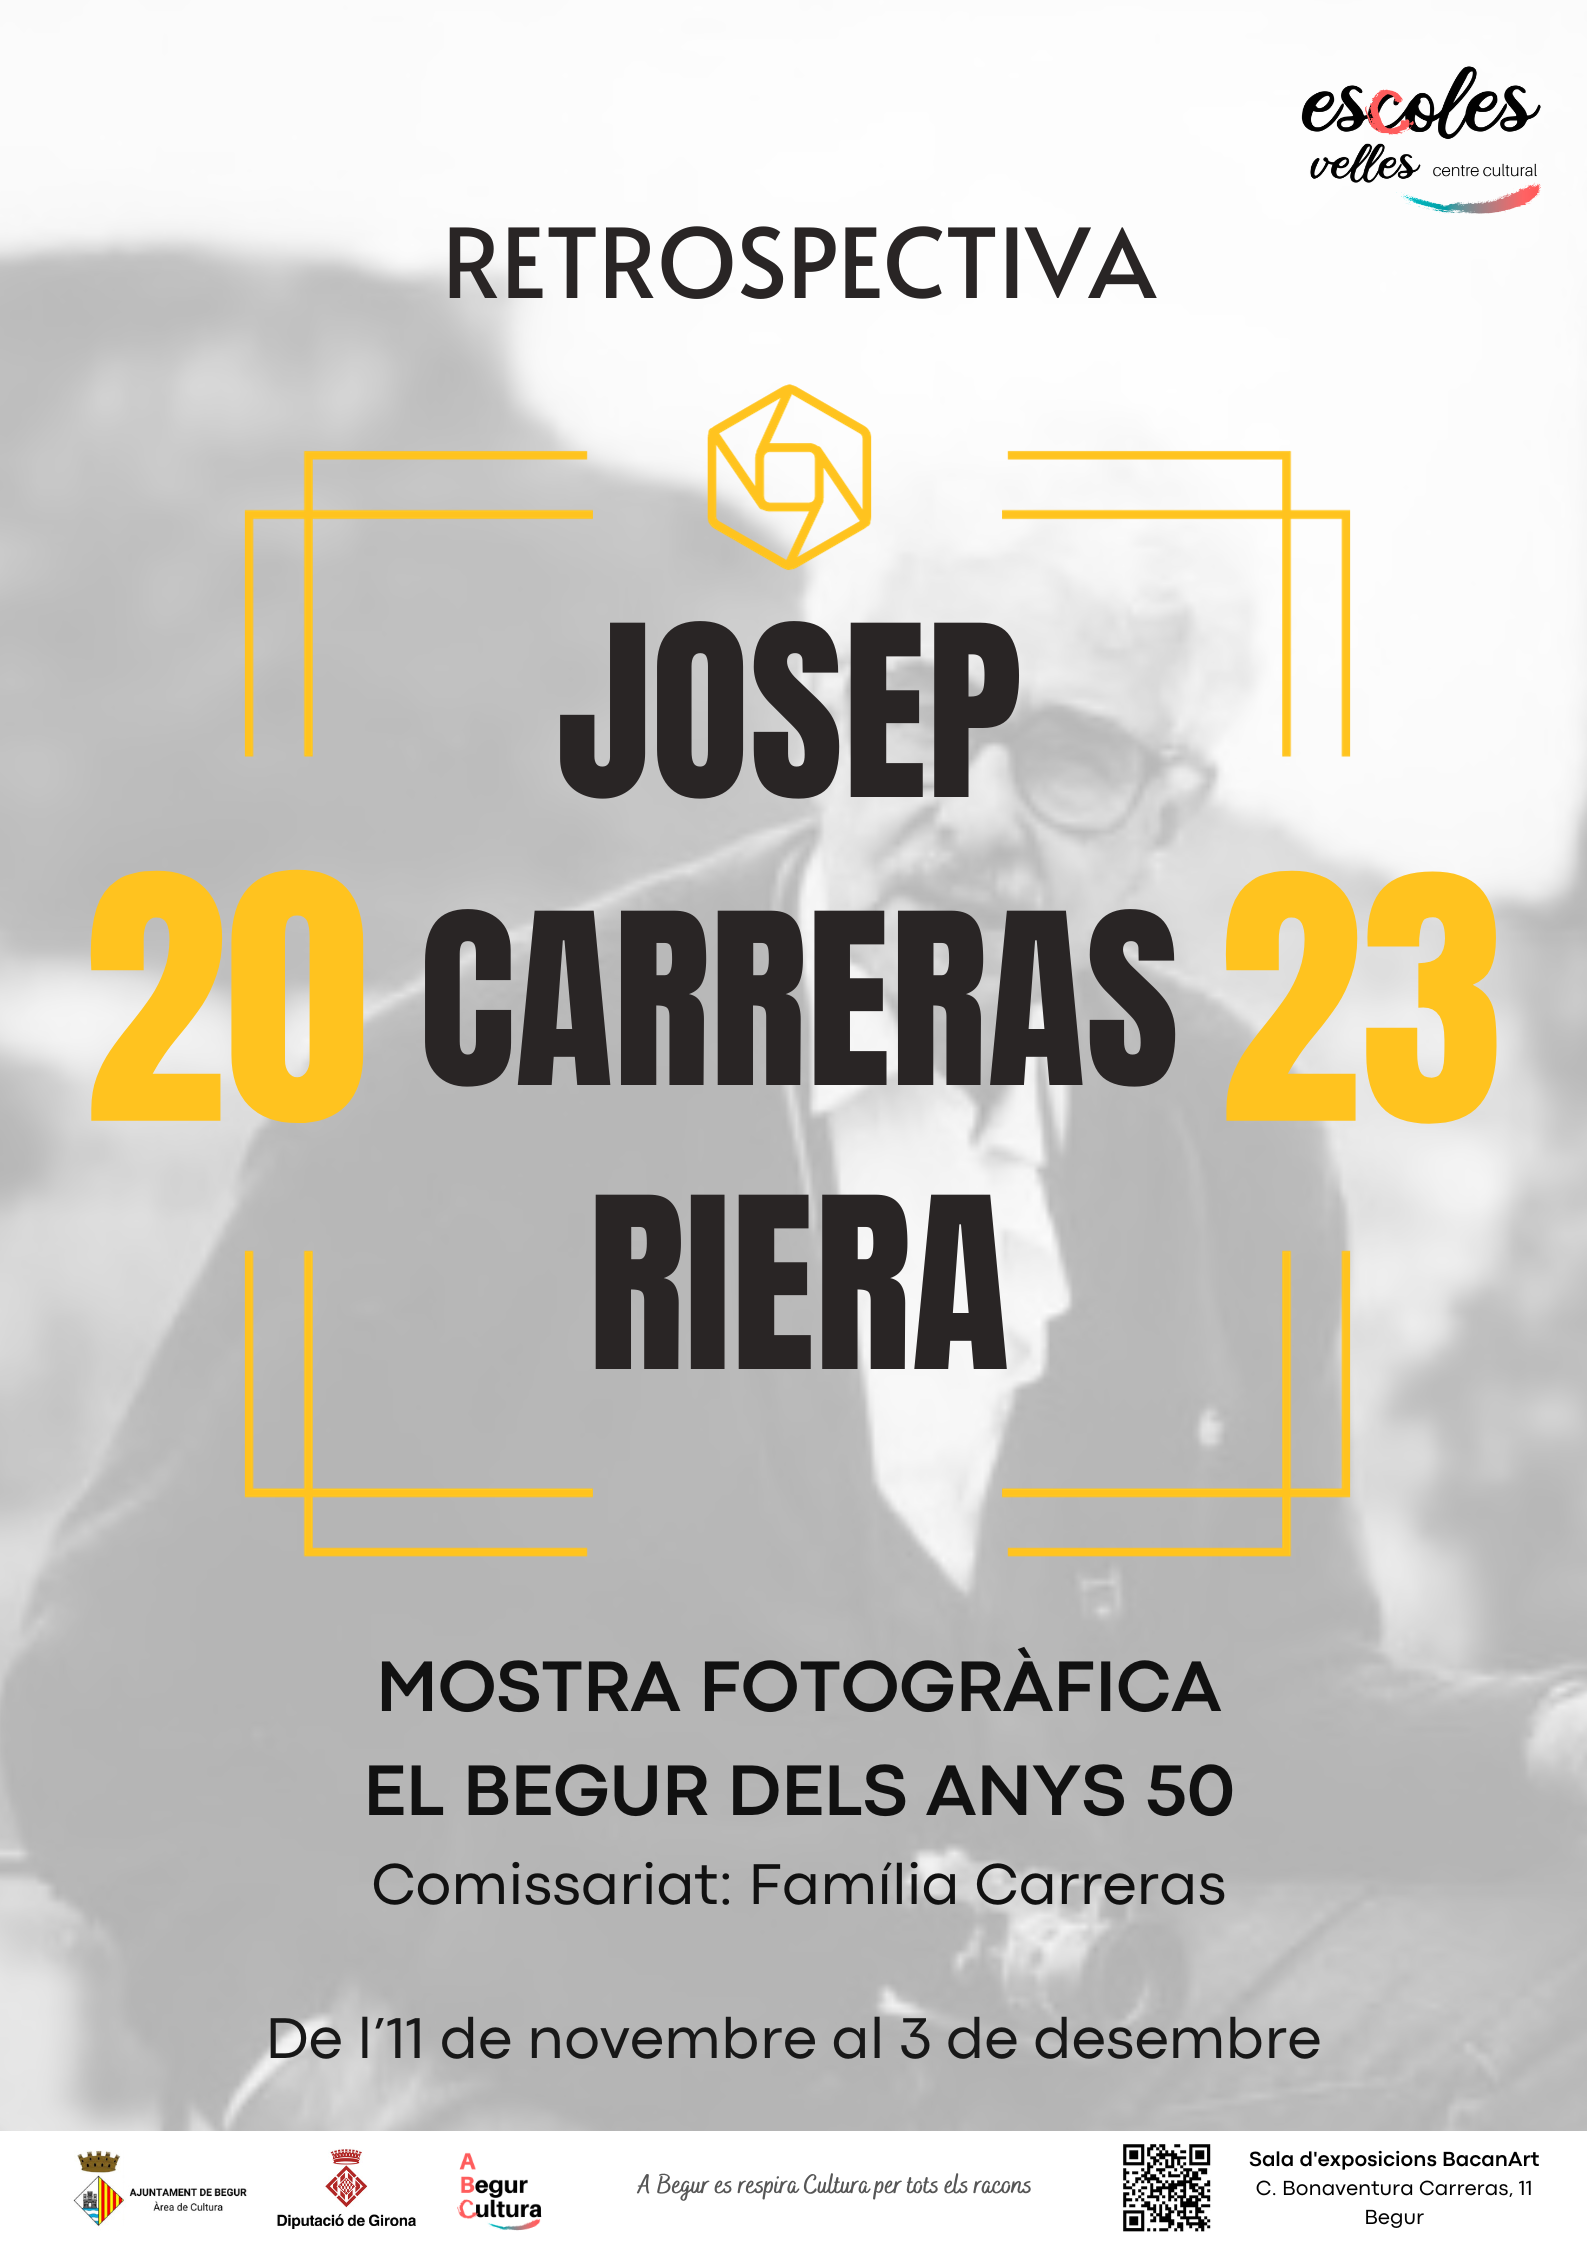 Retrospectiva Josep Carreras Riera